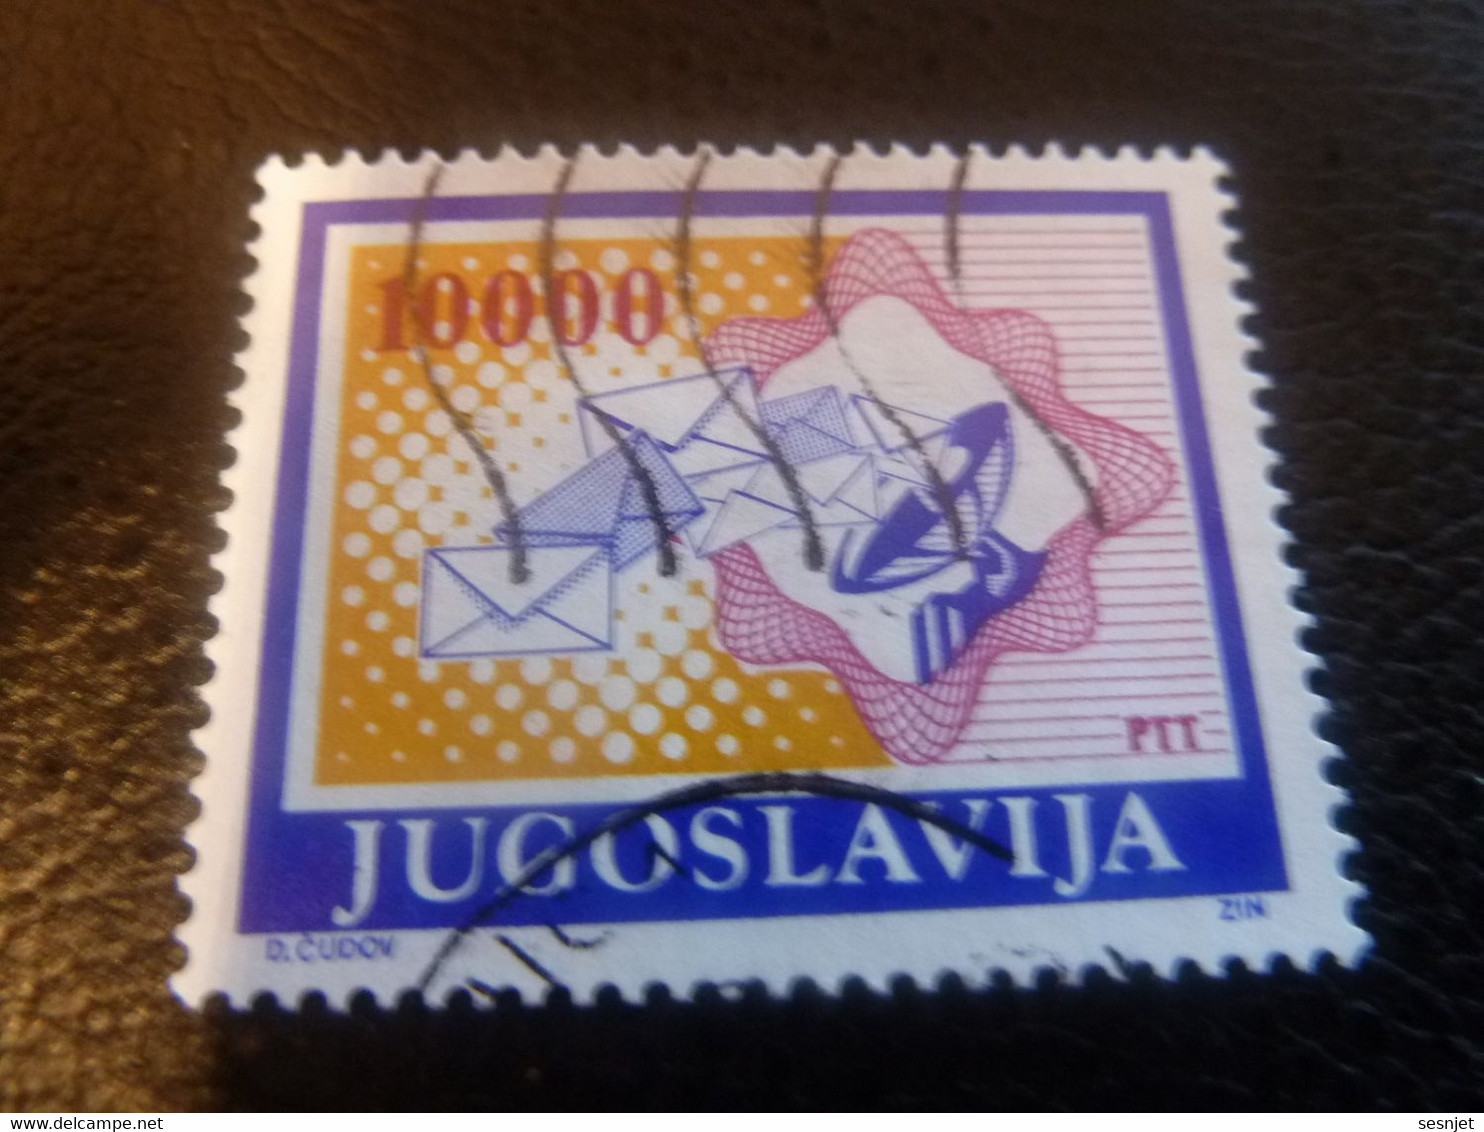 Ptt - Jugoslavija - D Cudov - Val 10000 - Multicolore - Oblitéré - - Usados